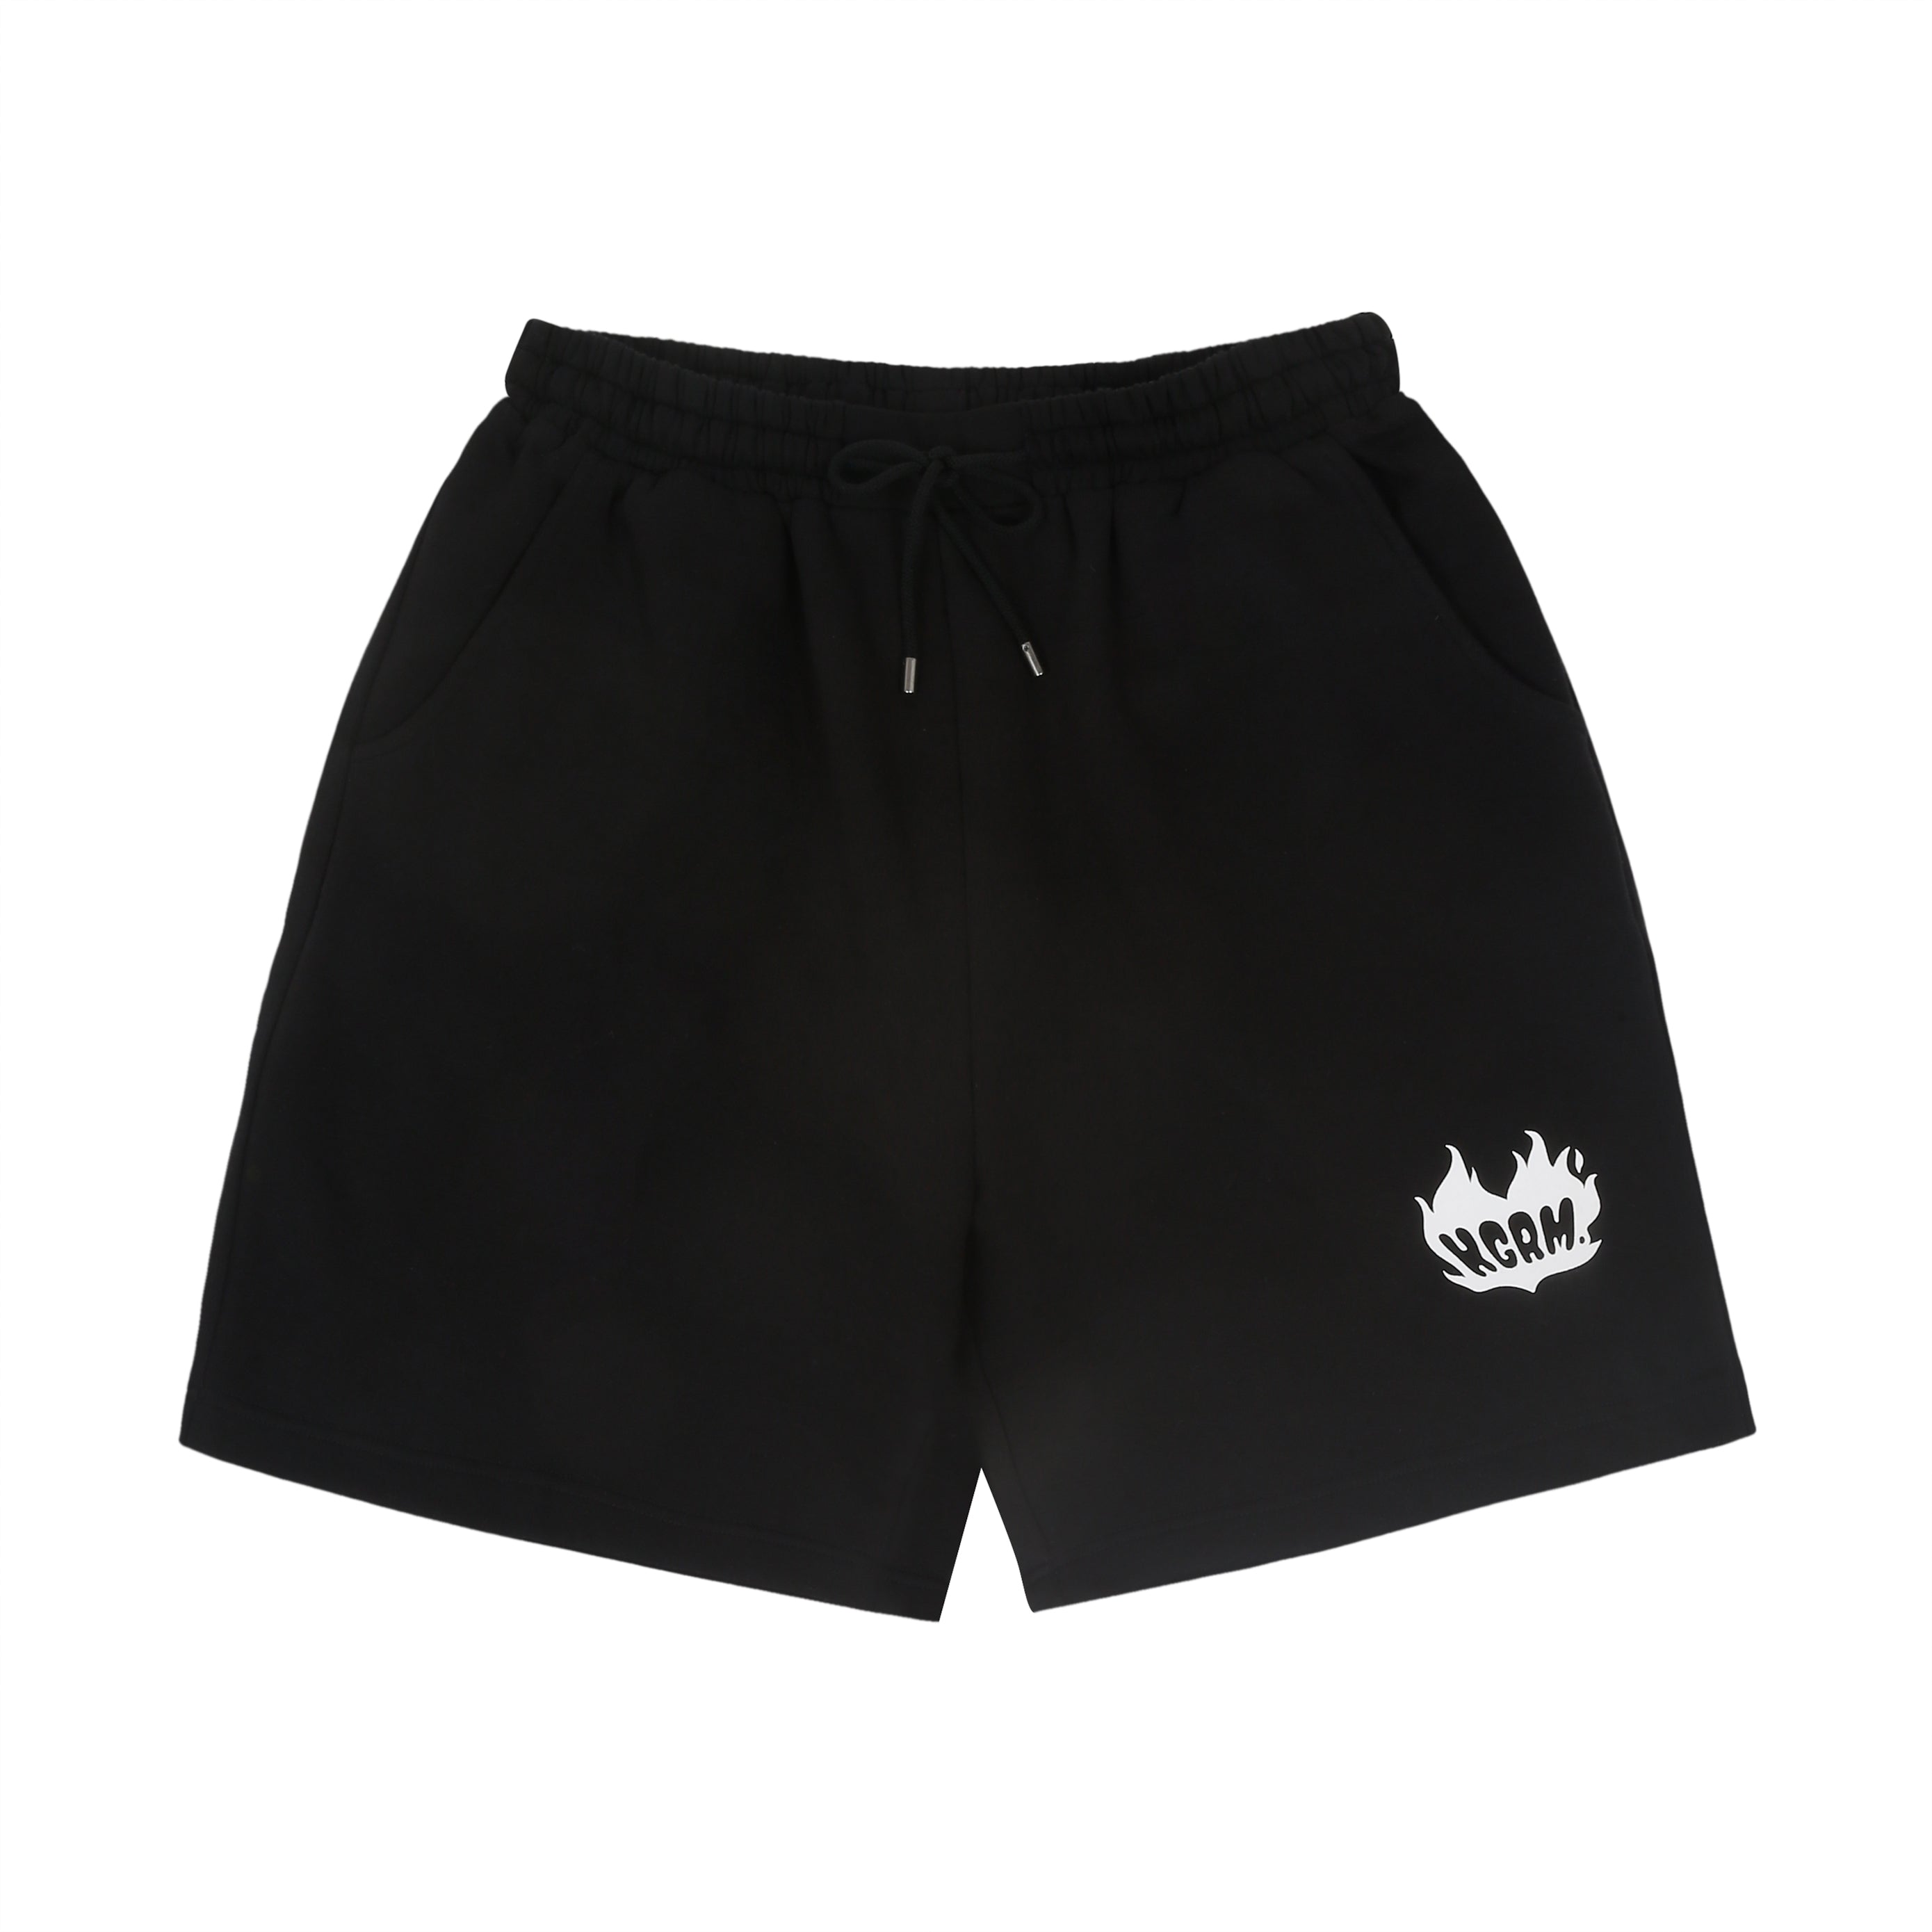 ‘KGRM Flame' shorts